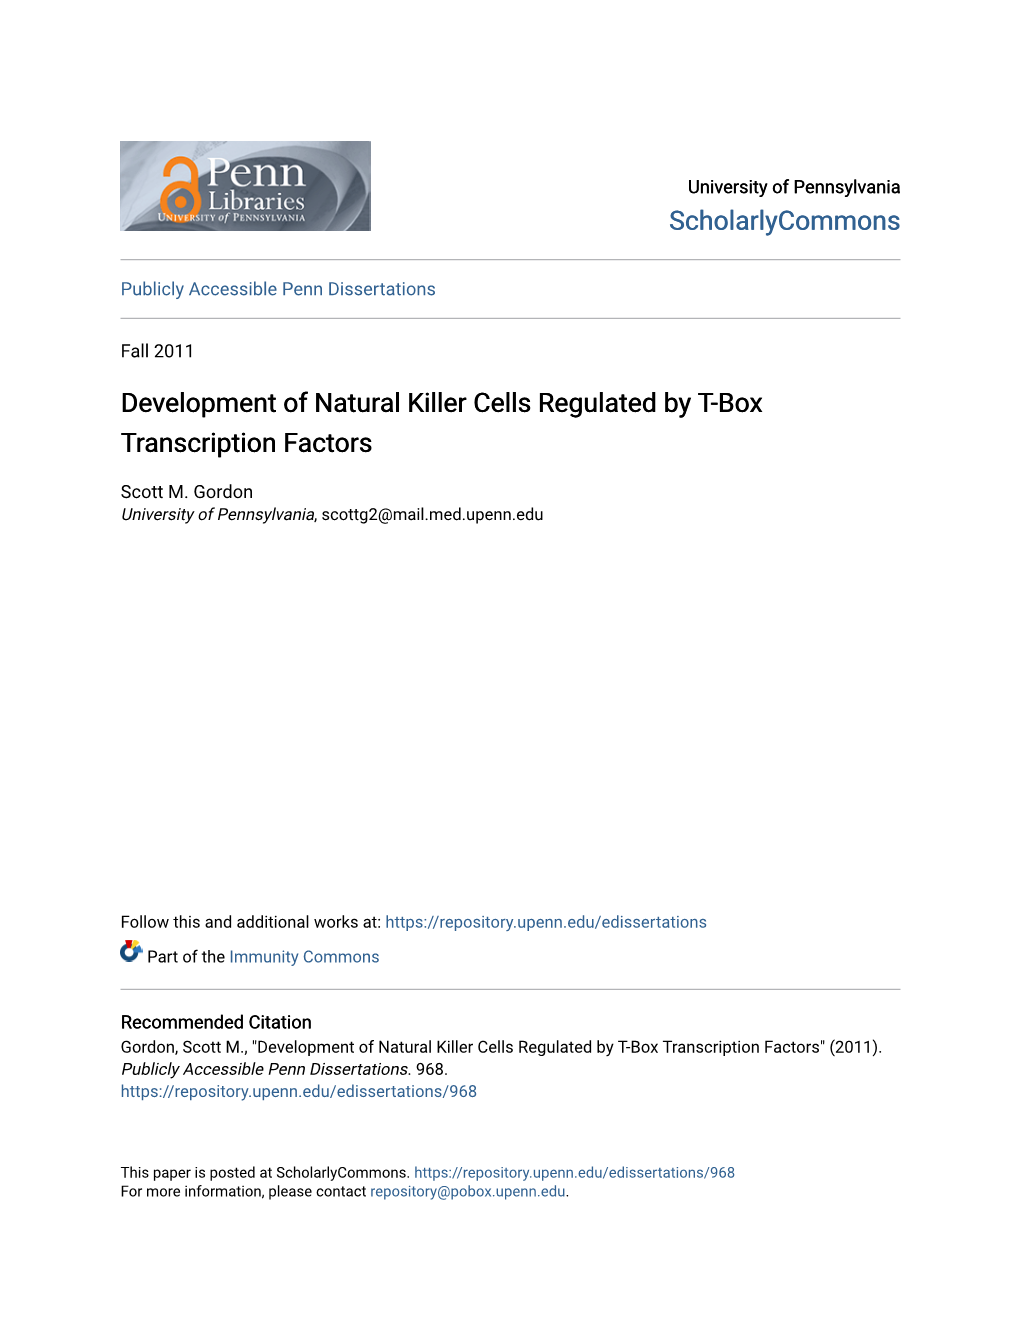 Development of Natural Killer Cells Regulated by T-Box Transcription Factors